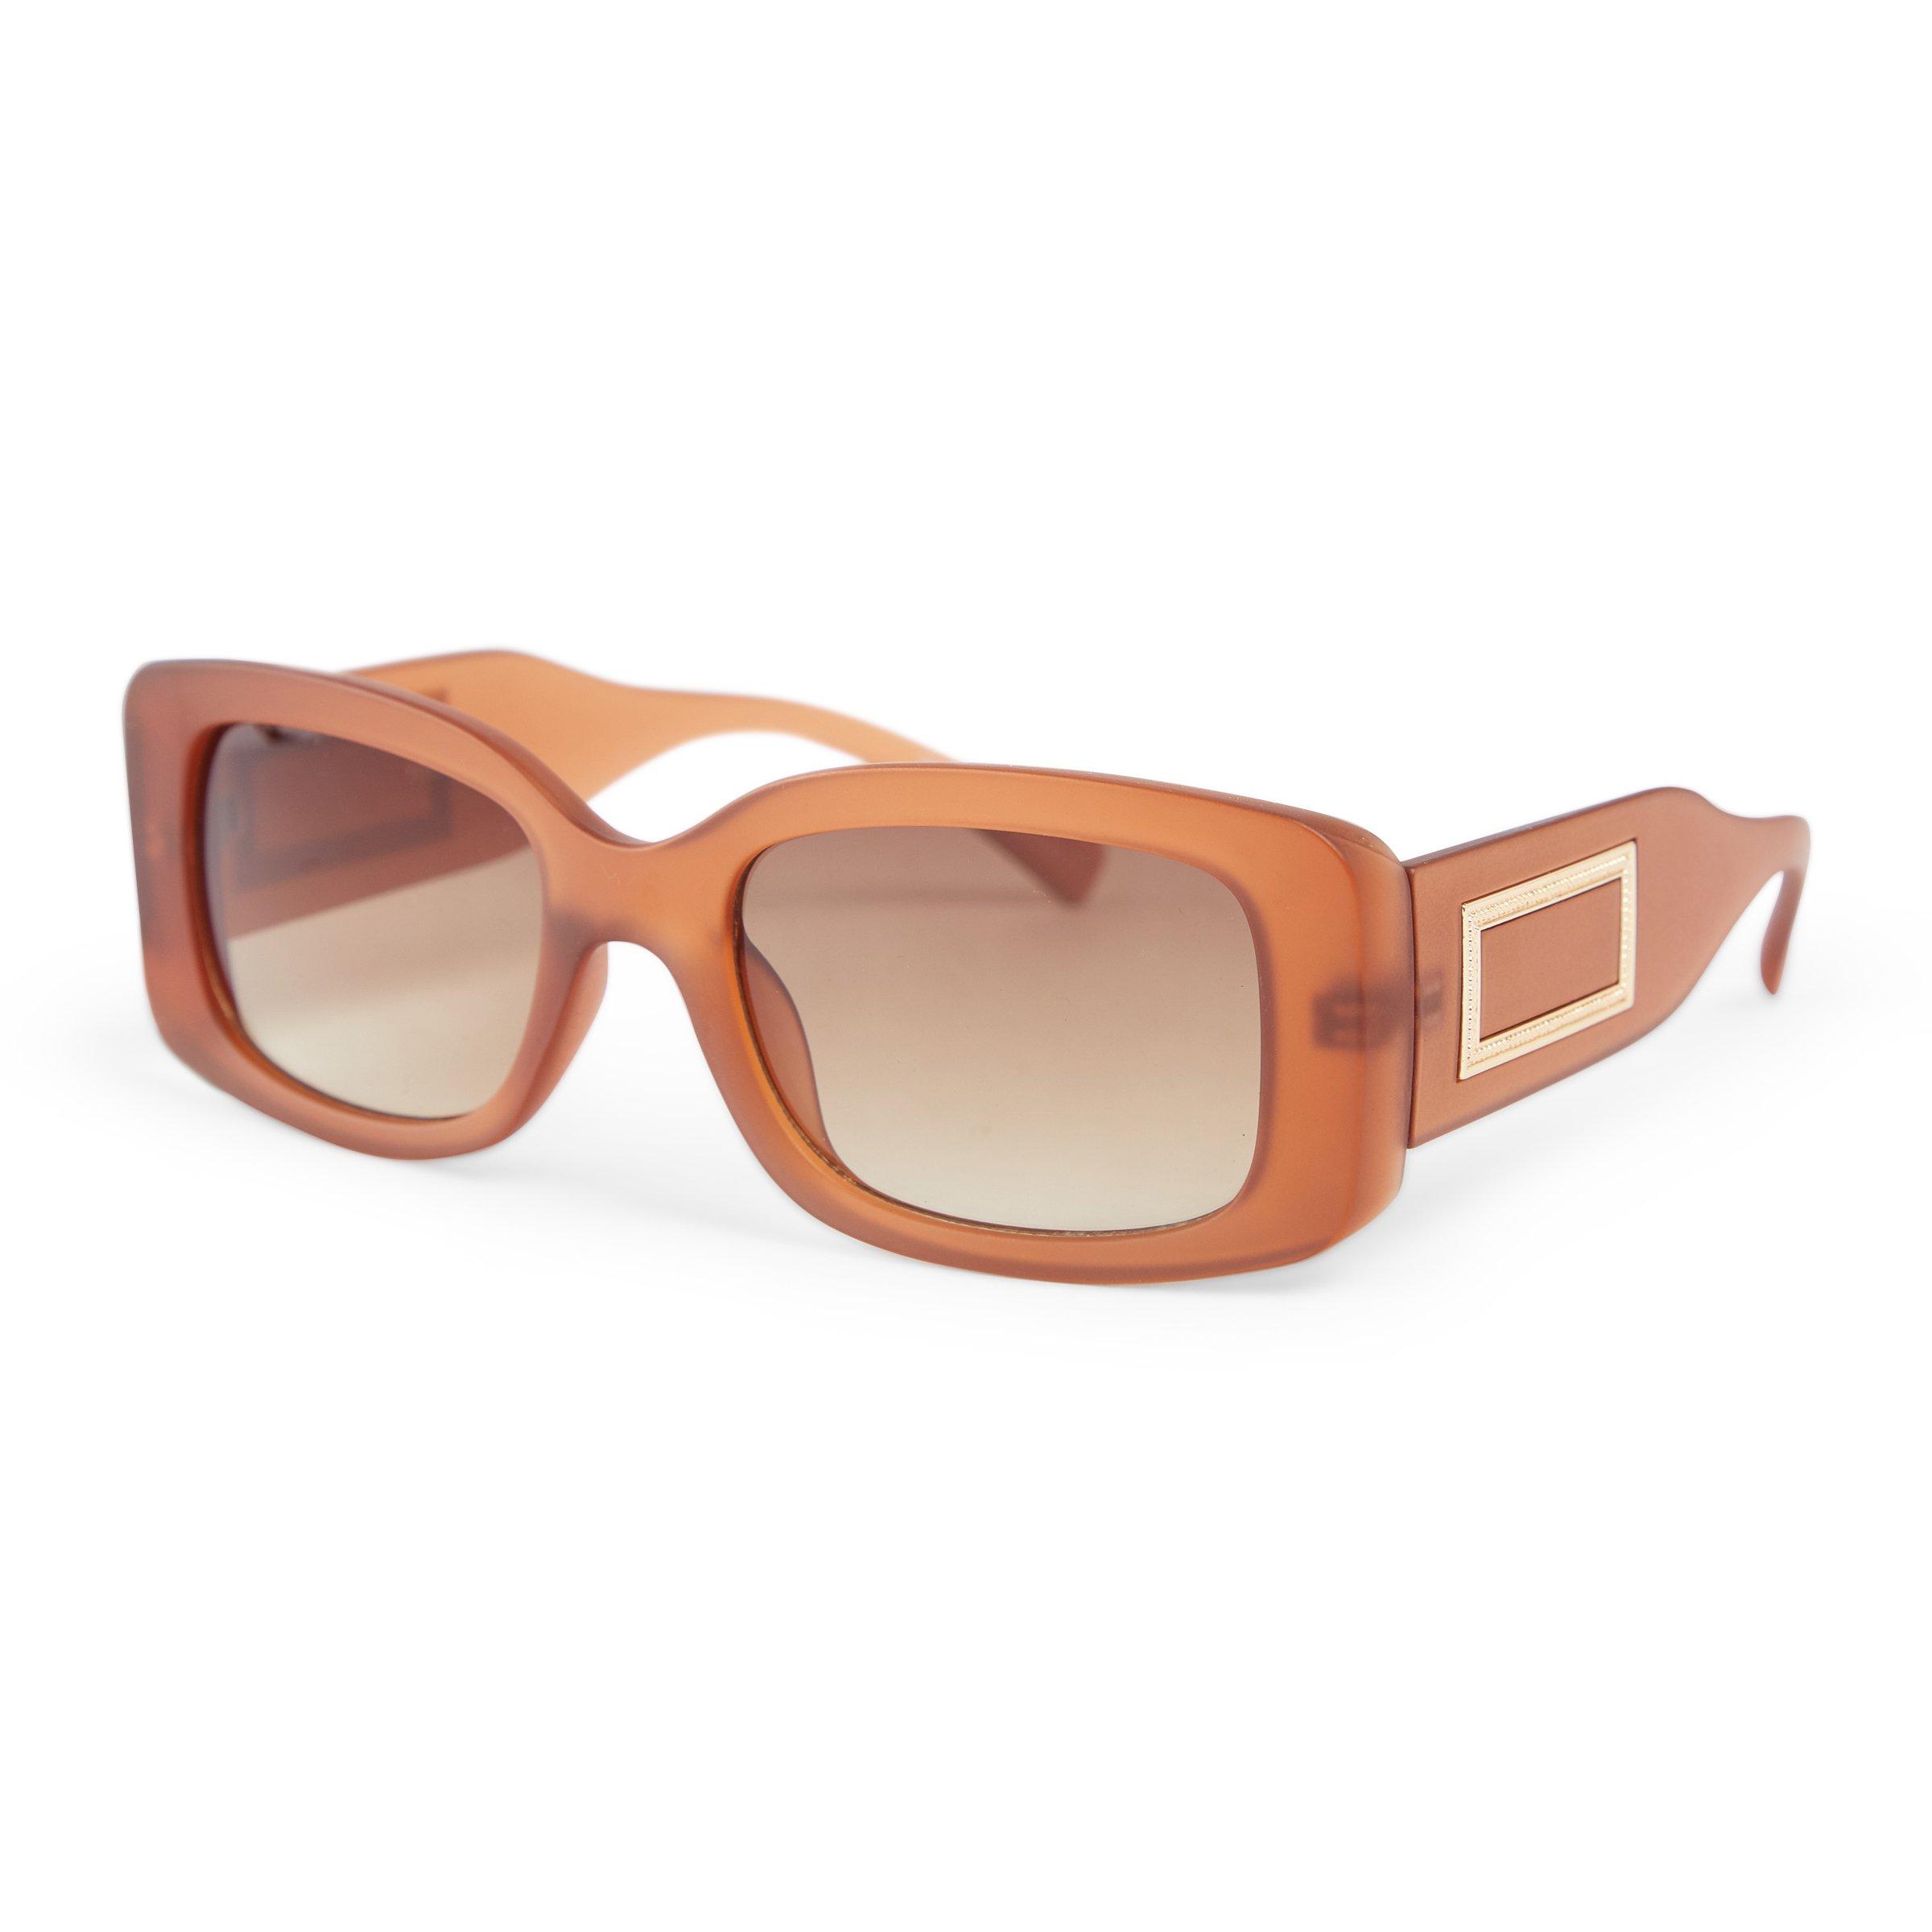 Orange Sunglasses 3064386 Truworths 